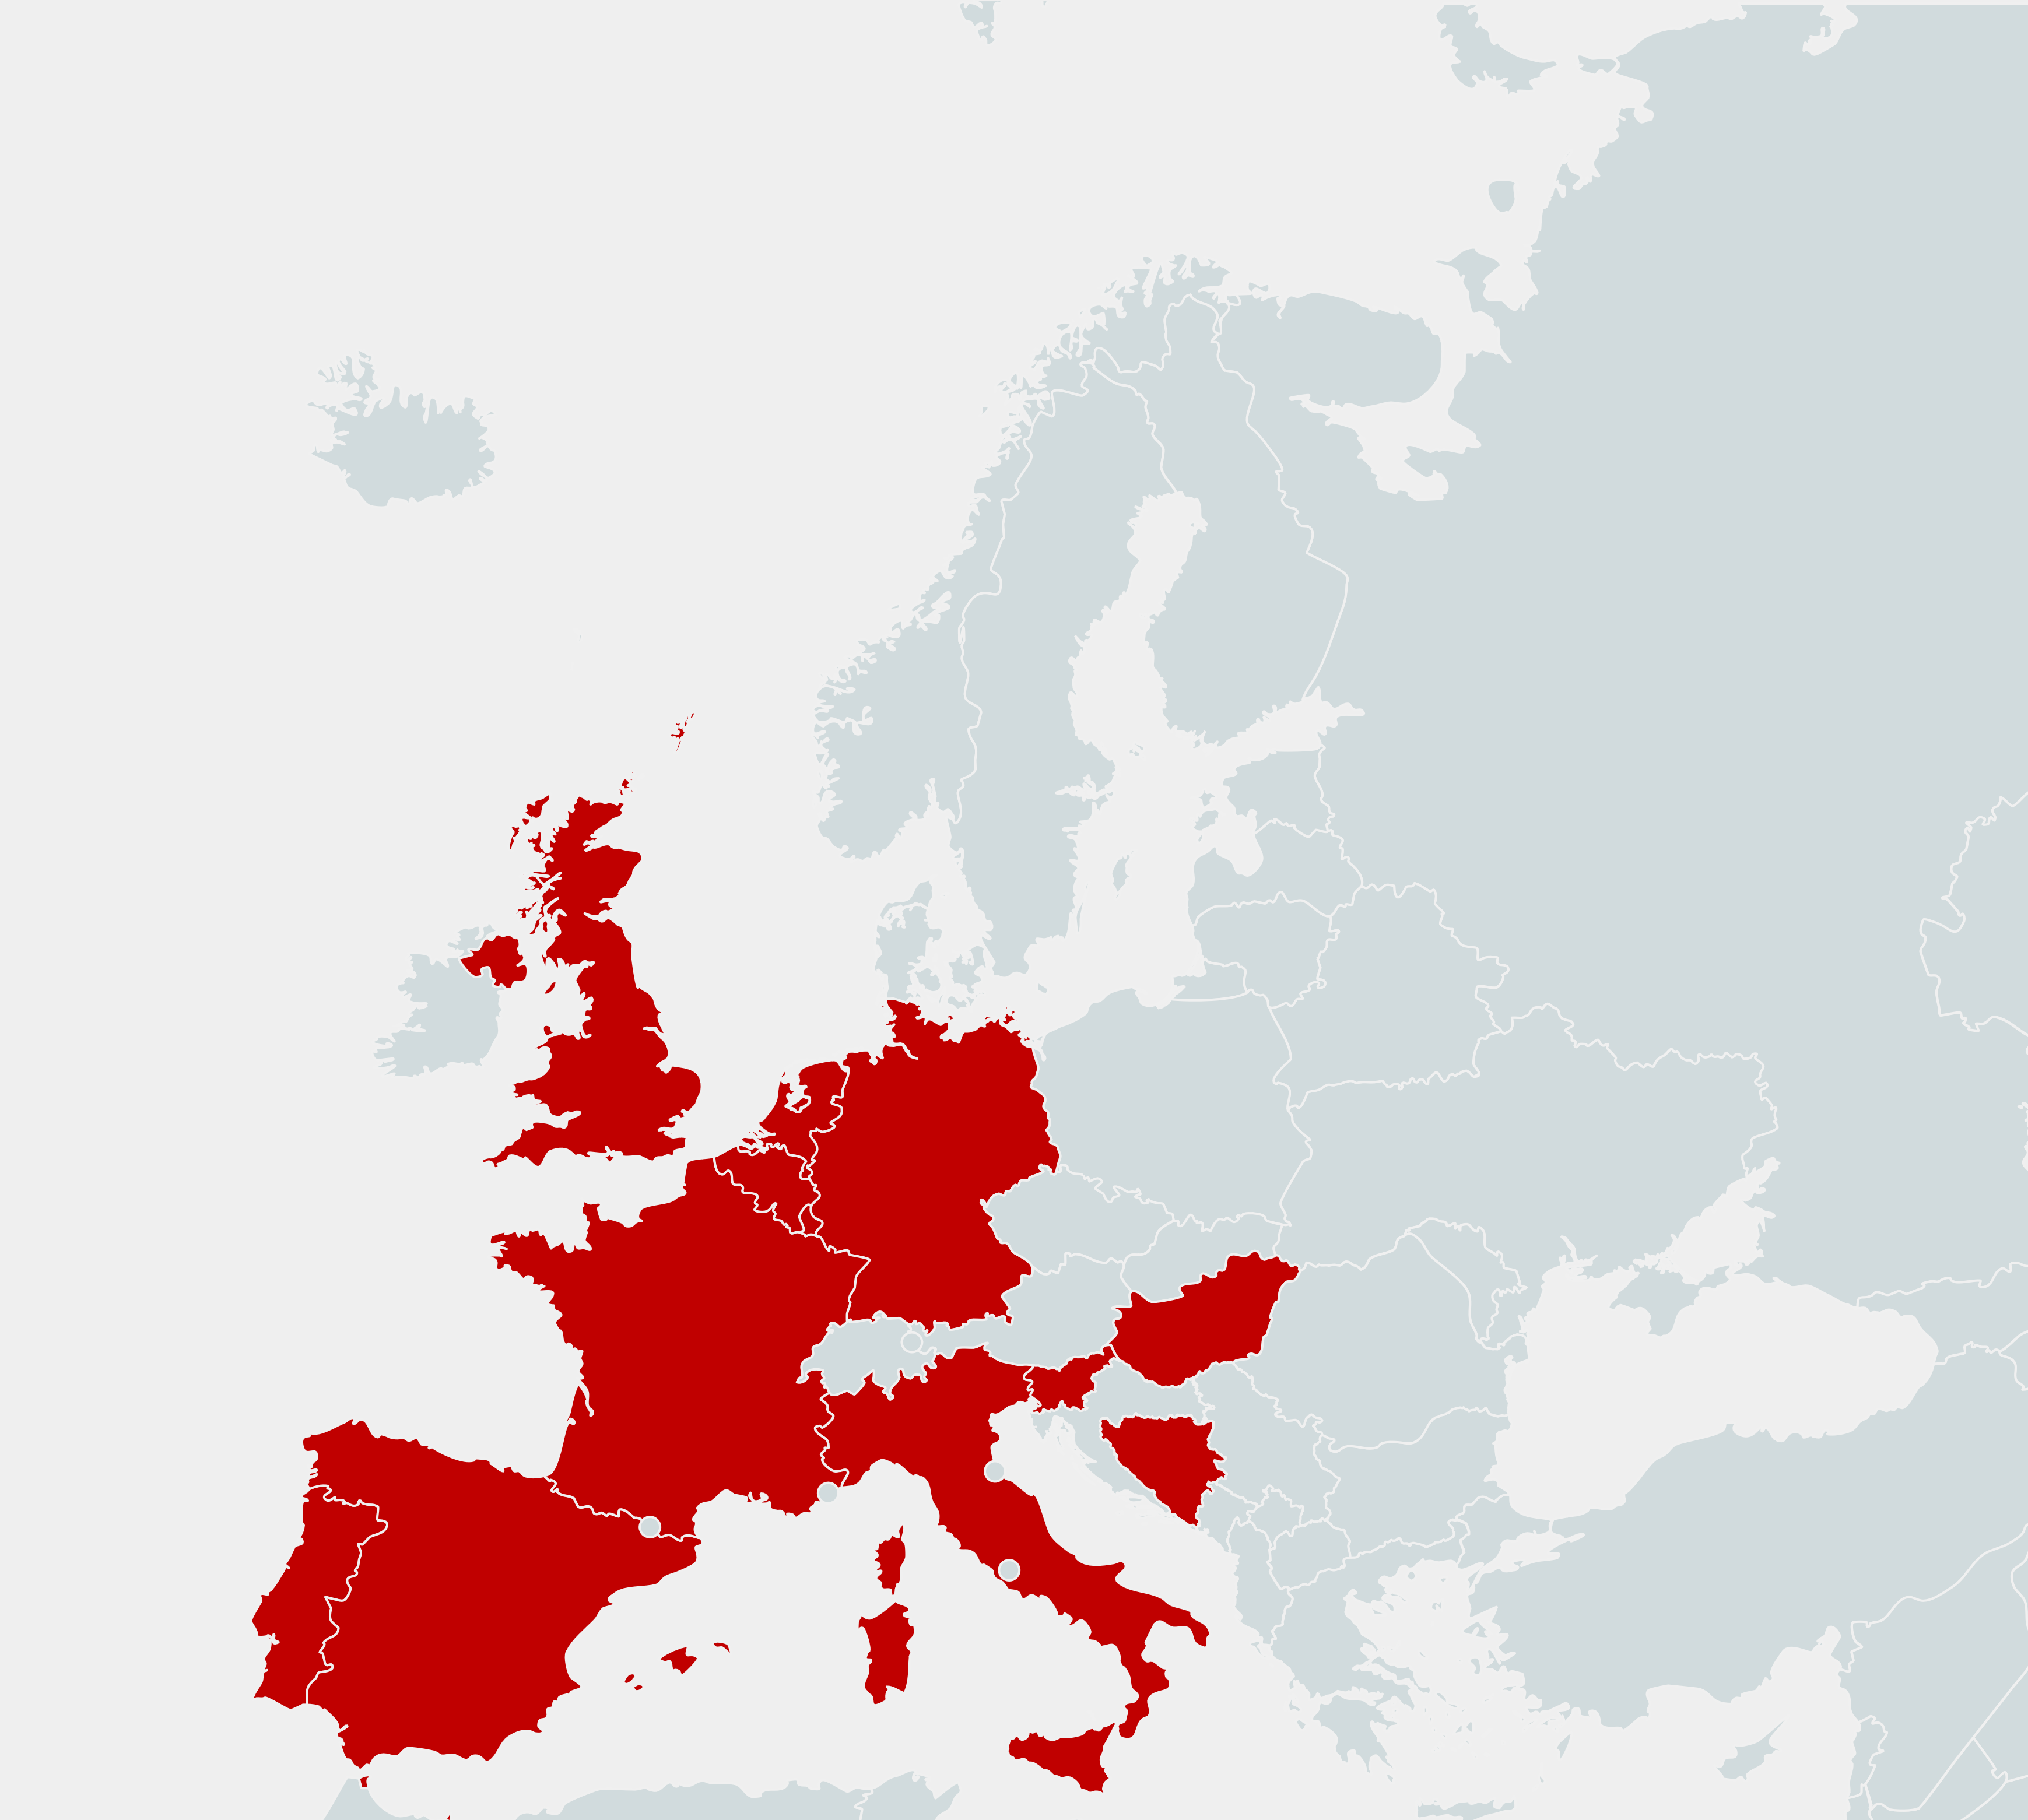 Geographic distribution of COVIRNA partners